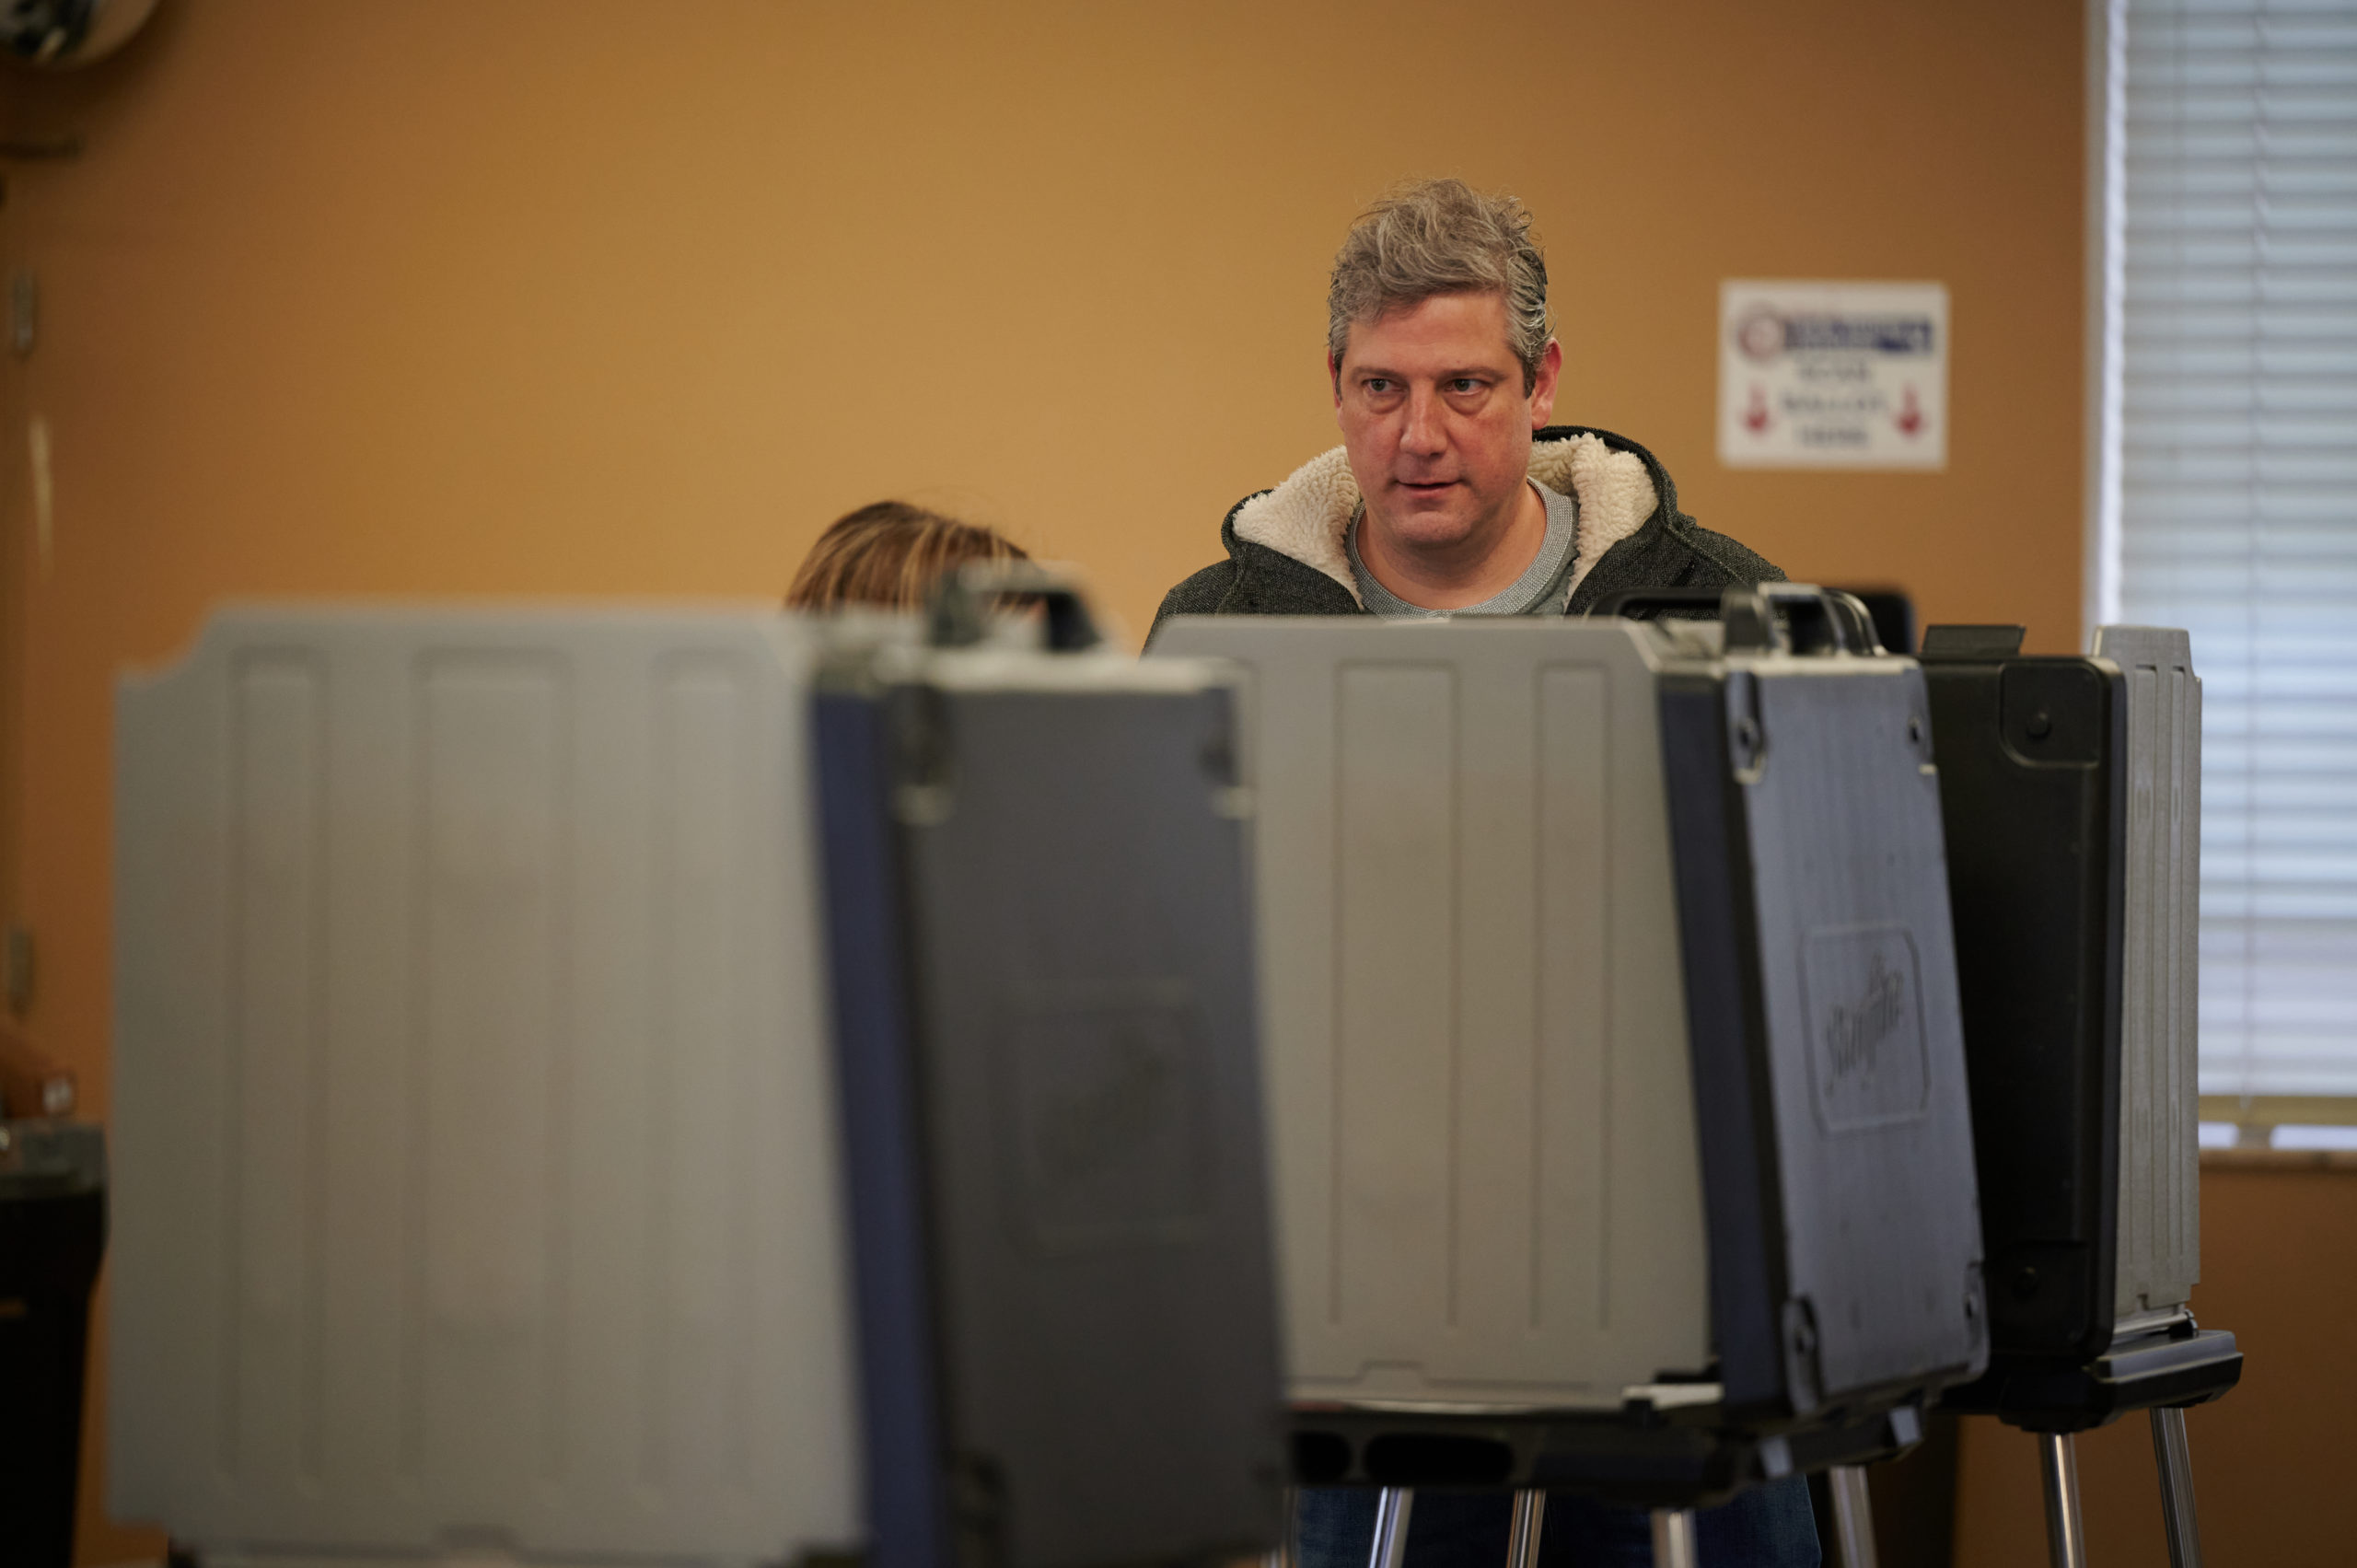 Ohio Senate Candidate Tim Ryan Votes Early In Democratic Primary Election